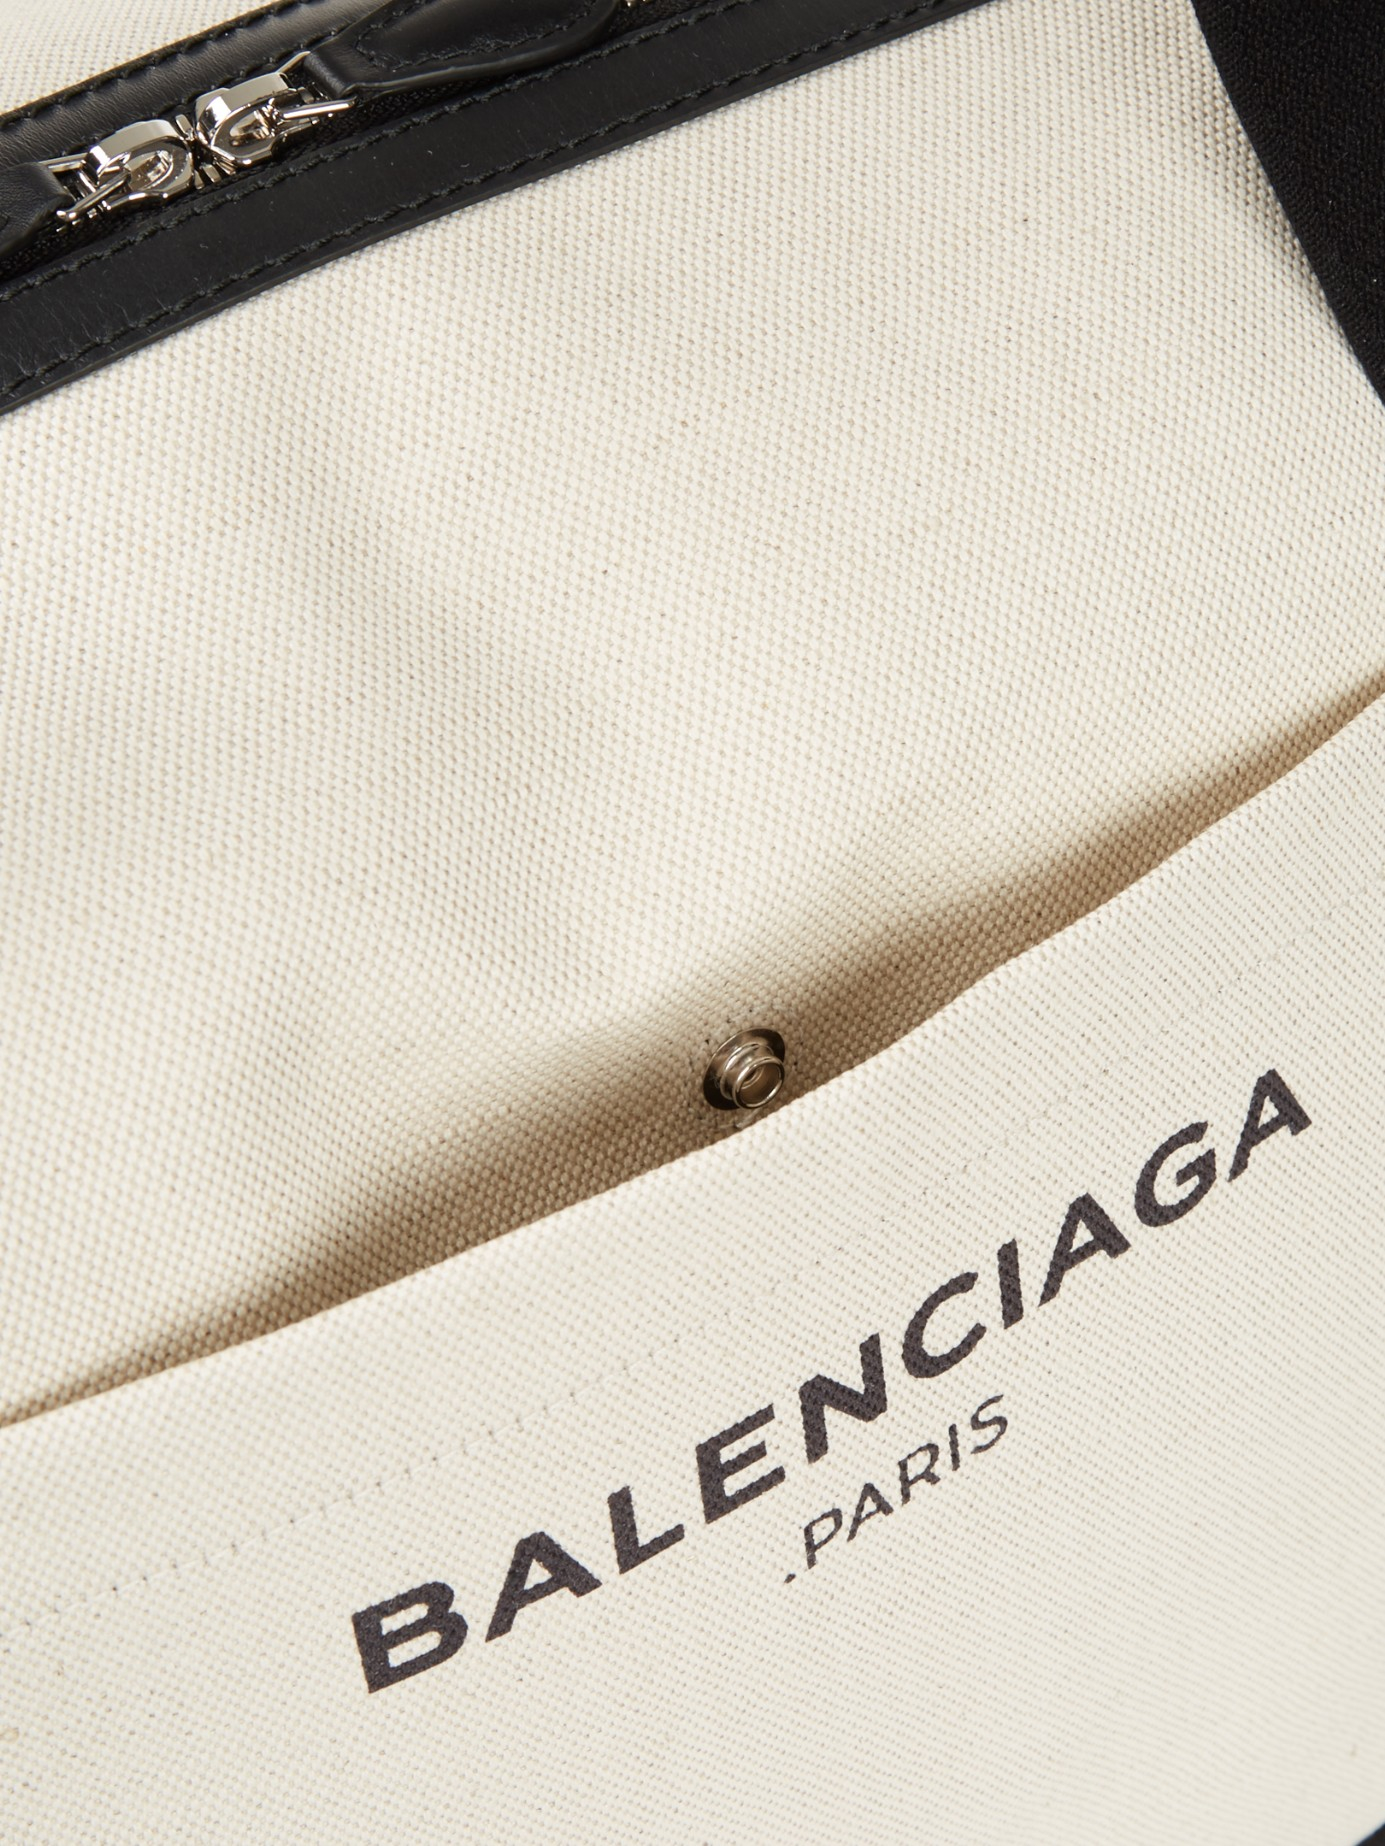 Balenciaga Ligne Large Cotton-Canvas Weekender Bag in Black | Lyst